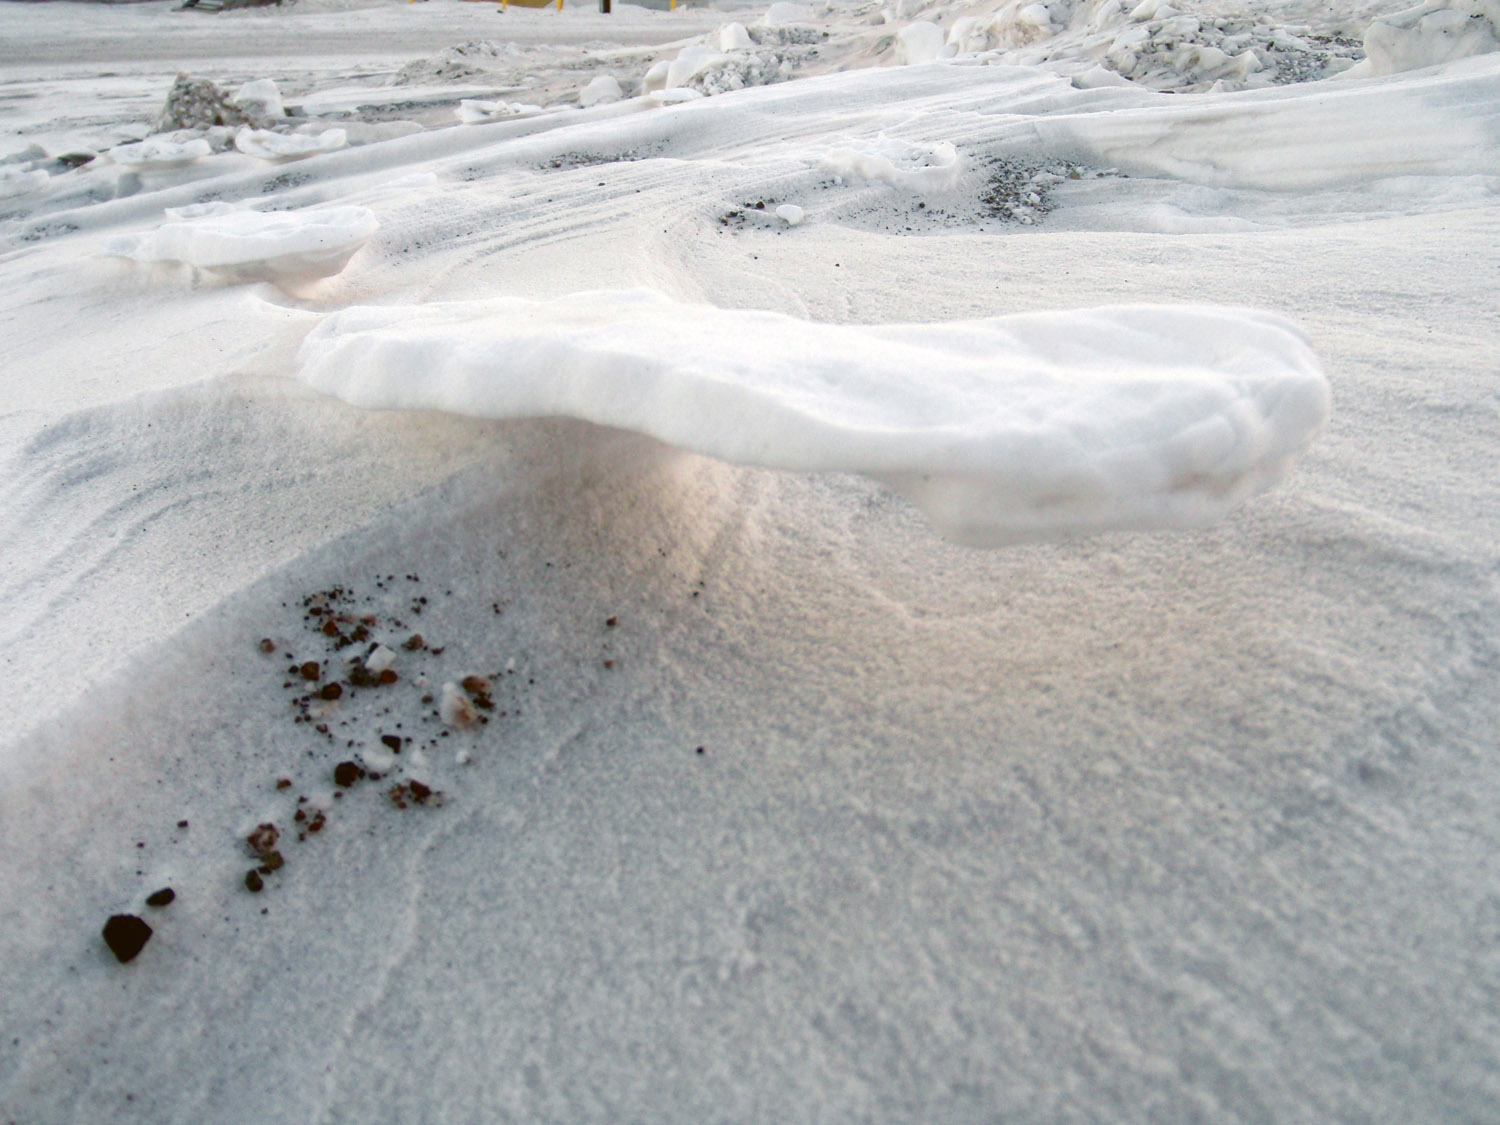 Raised Footprints in the Snow